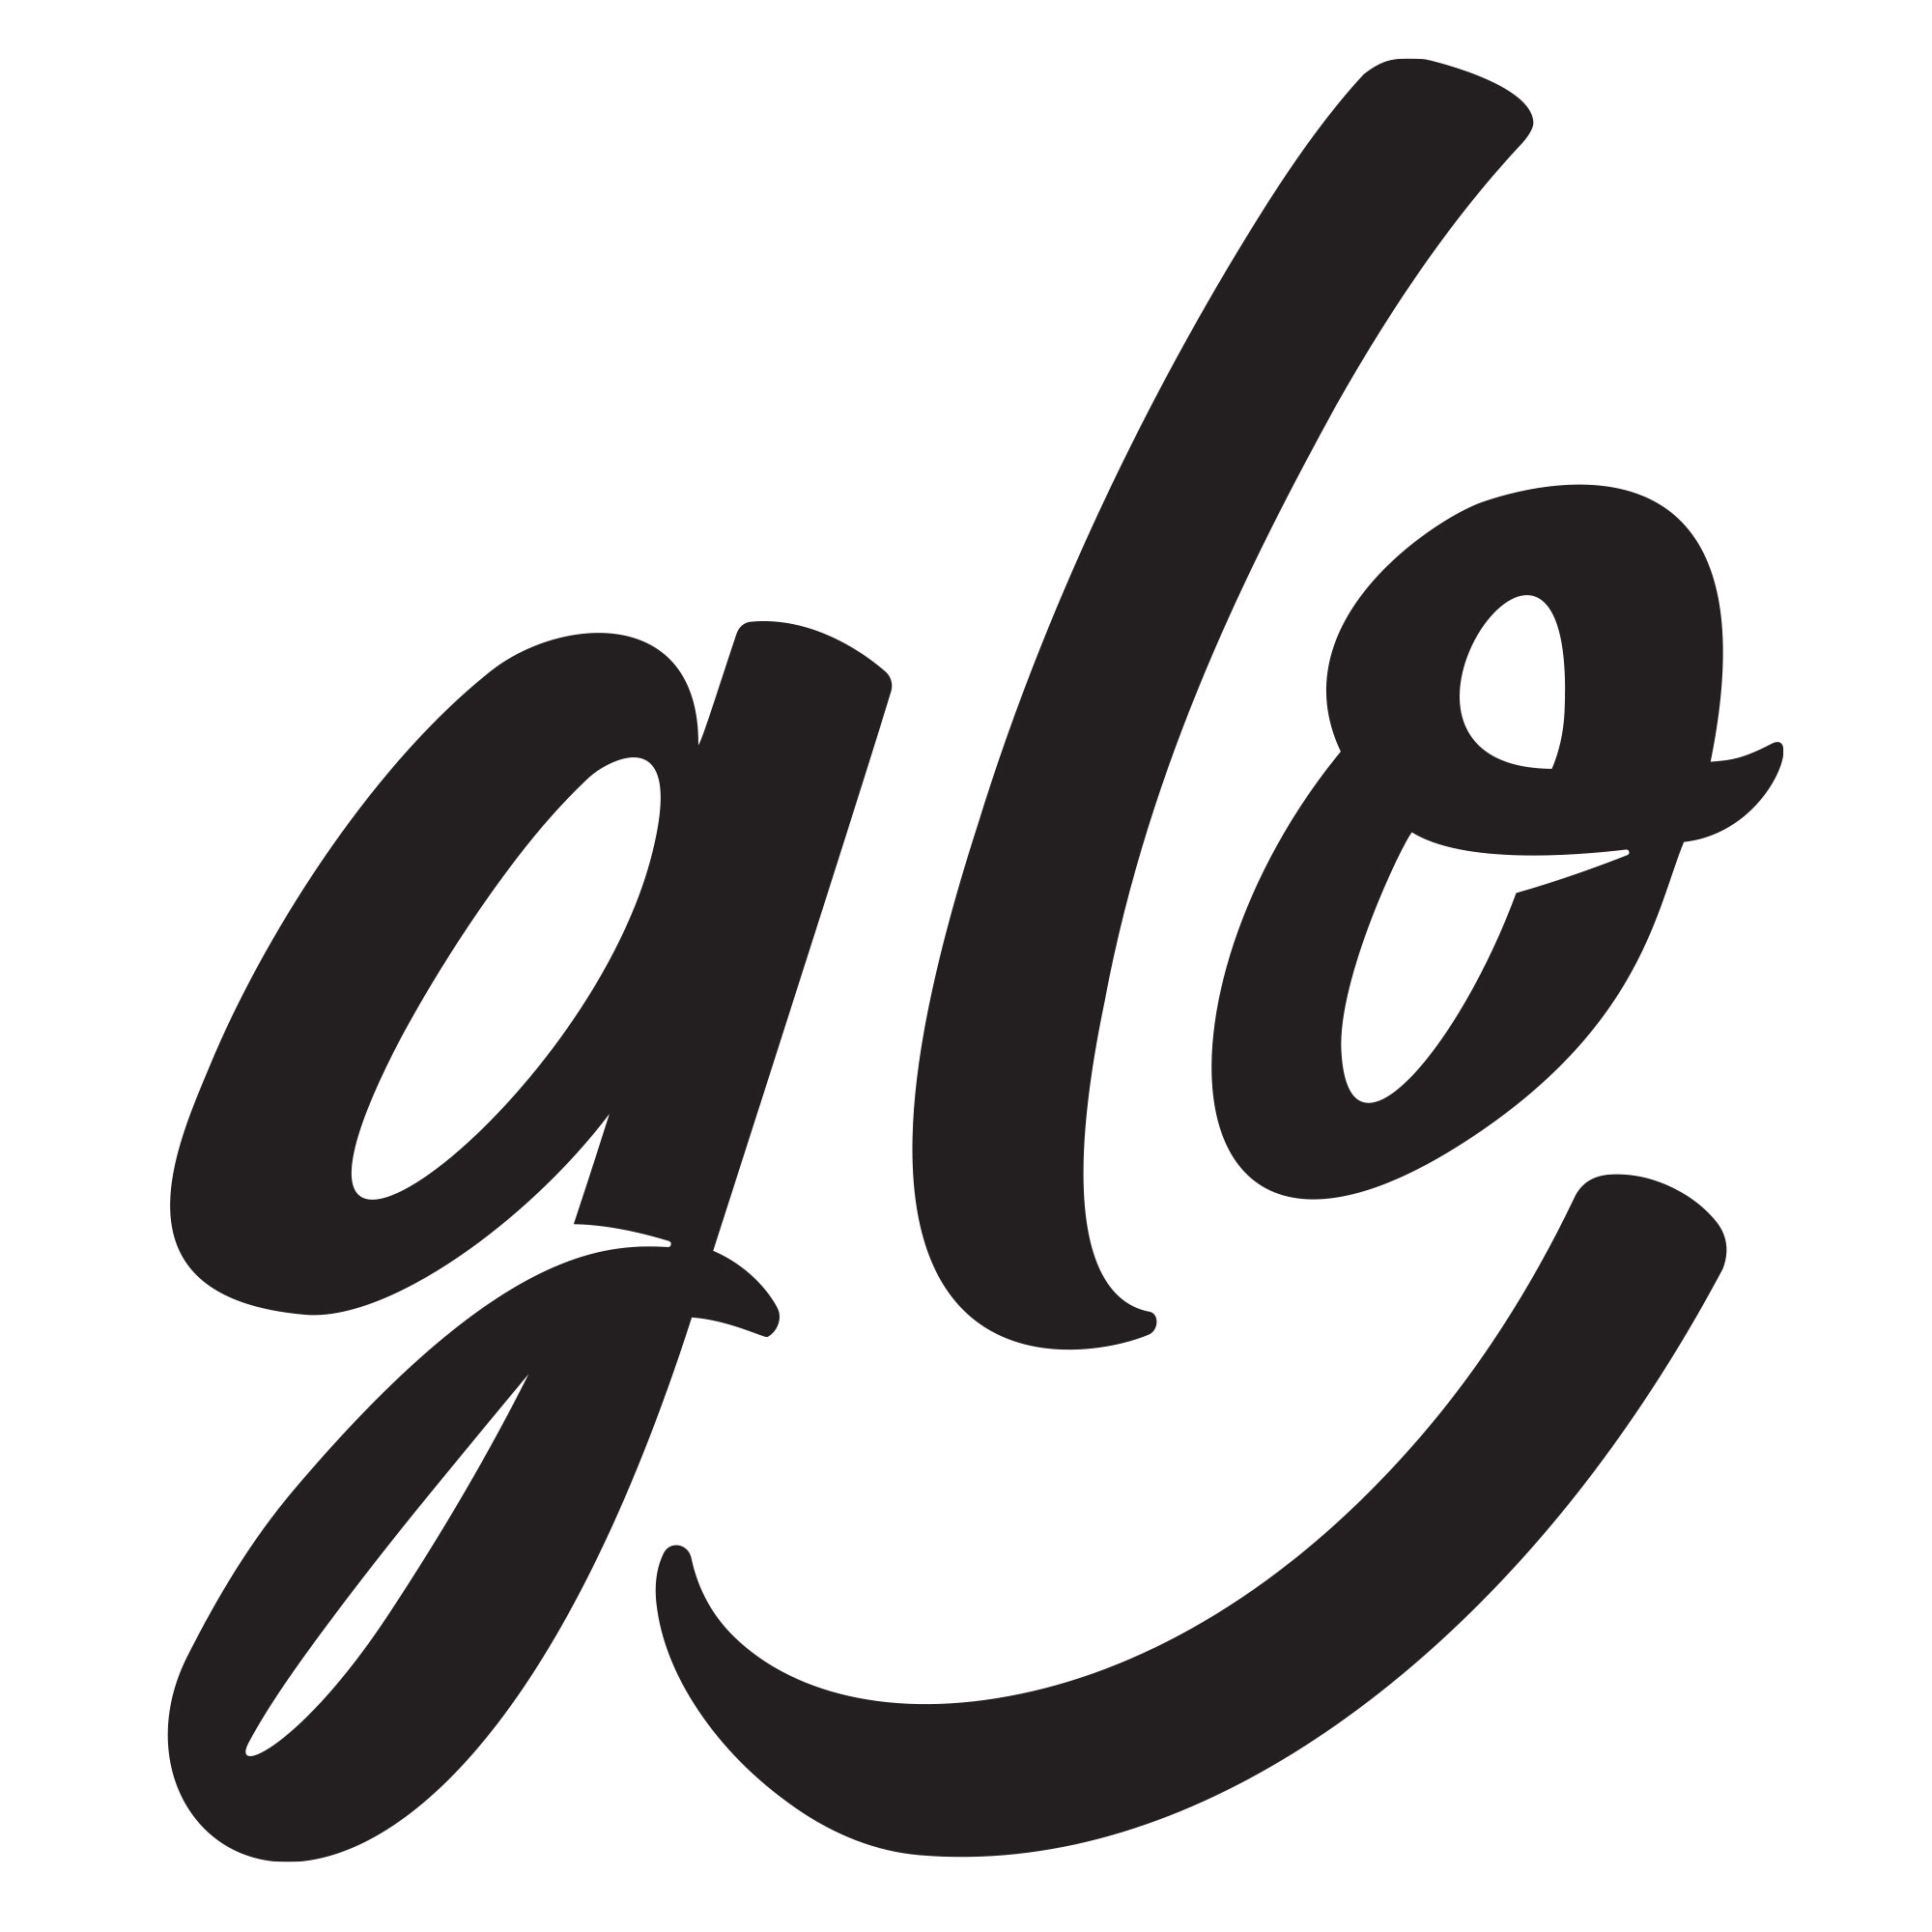 Glo-Logo-BLACK.jpg (124 KB)